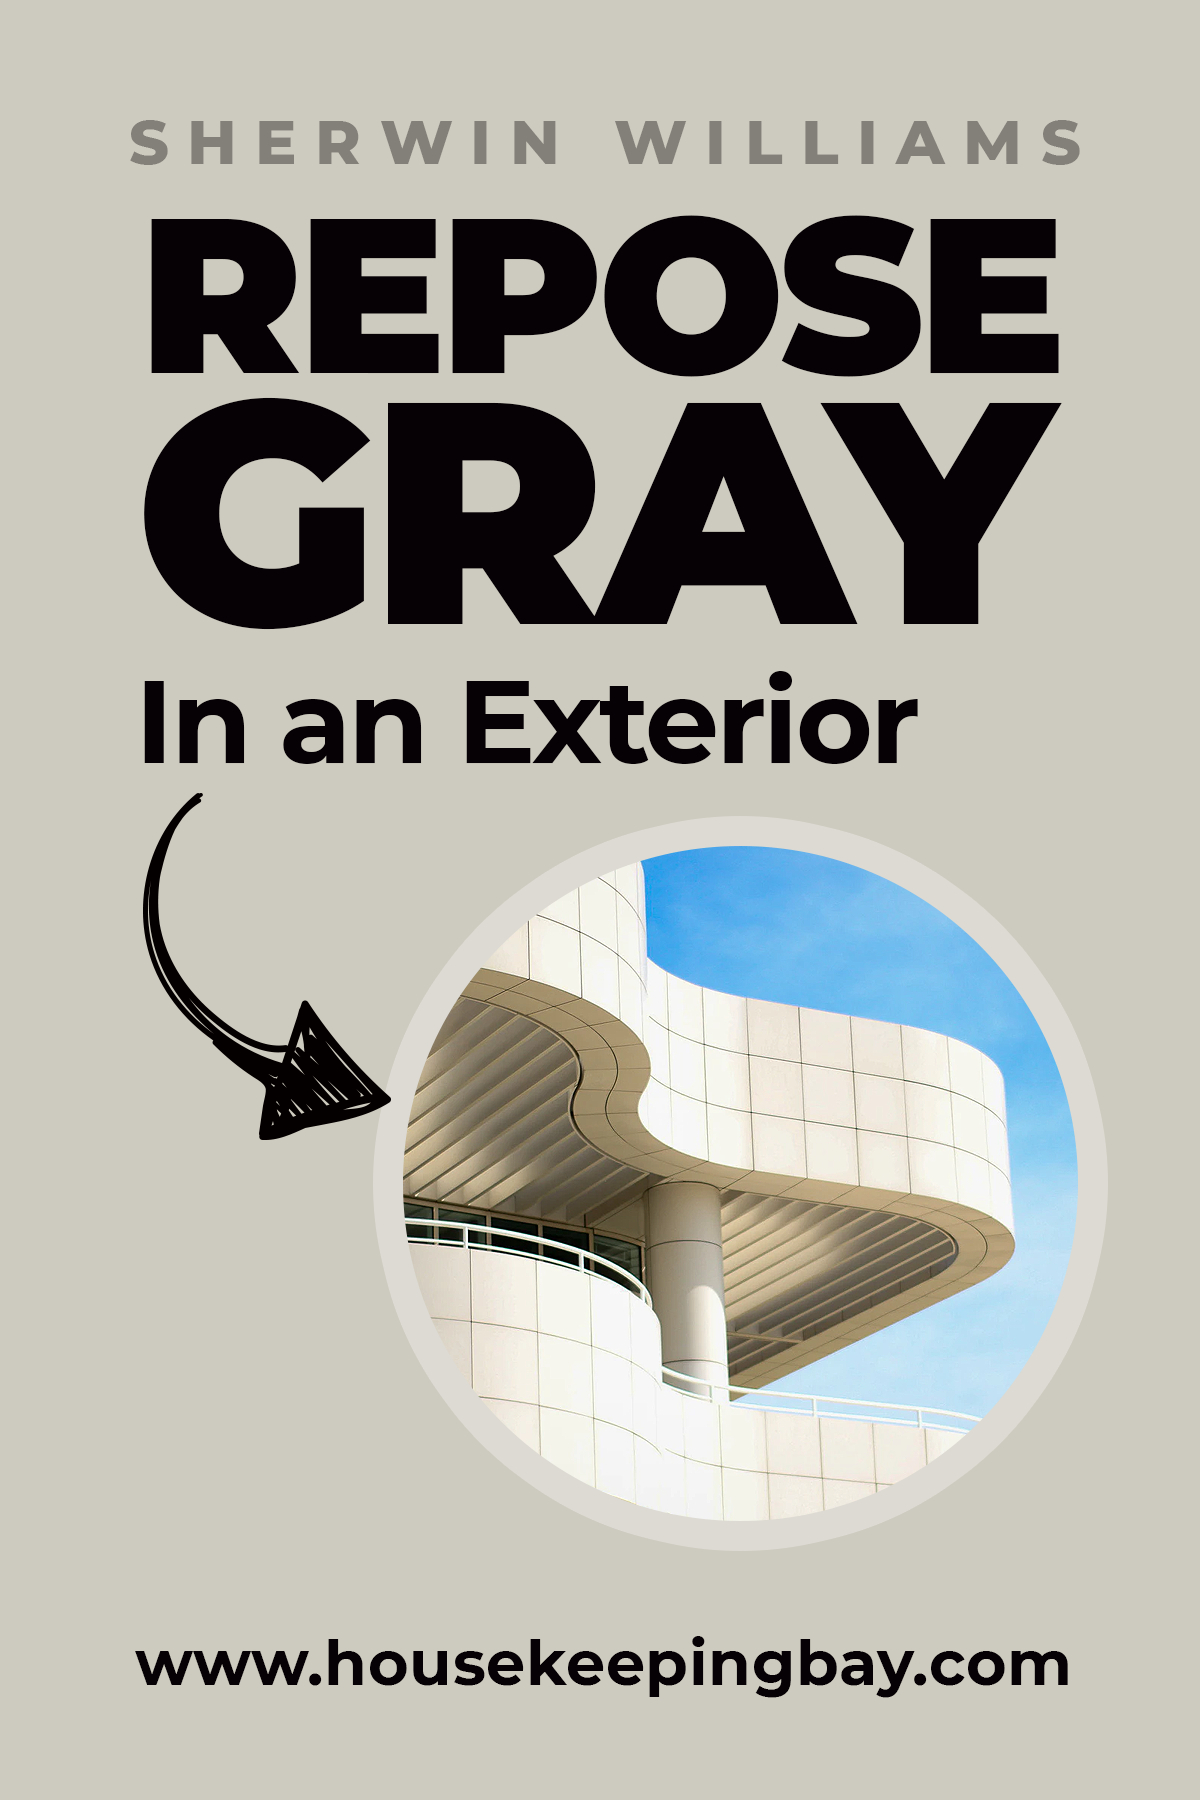 Repose Gray in Exterior